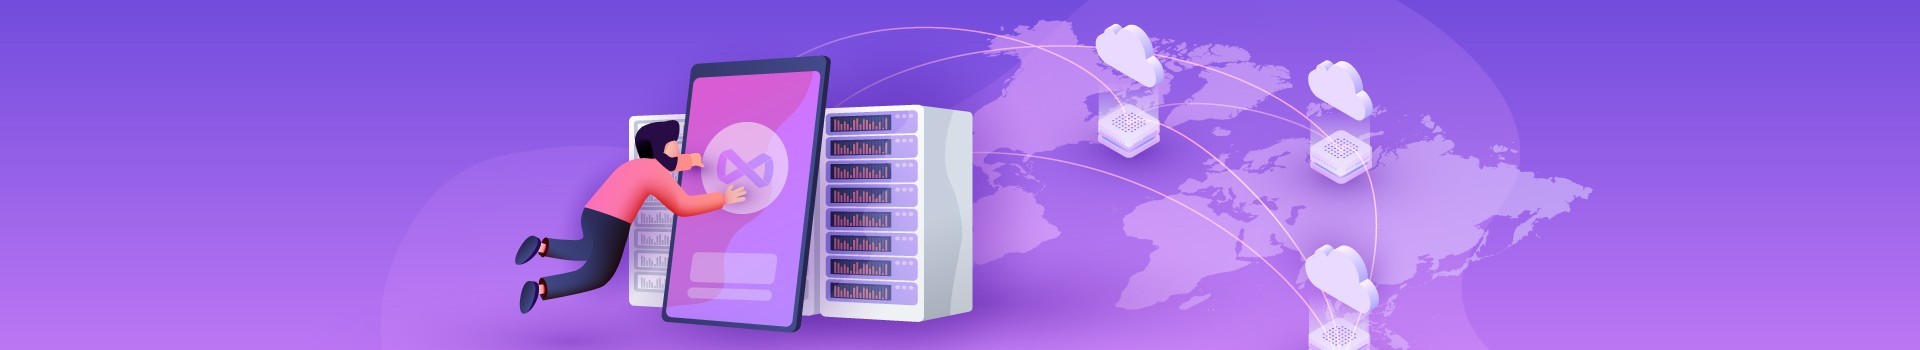 Cloud Interconnect Benefits for Data Centre Operators